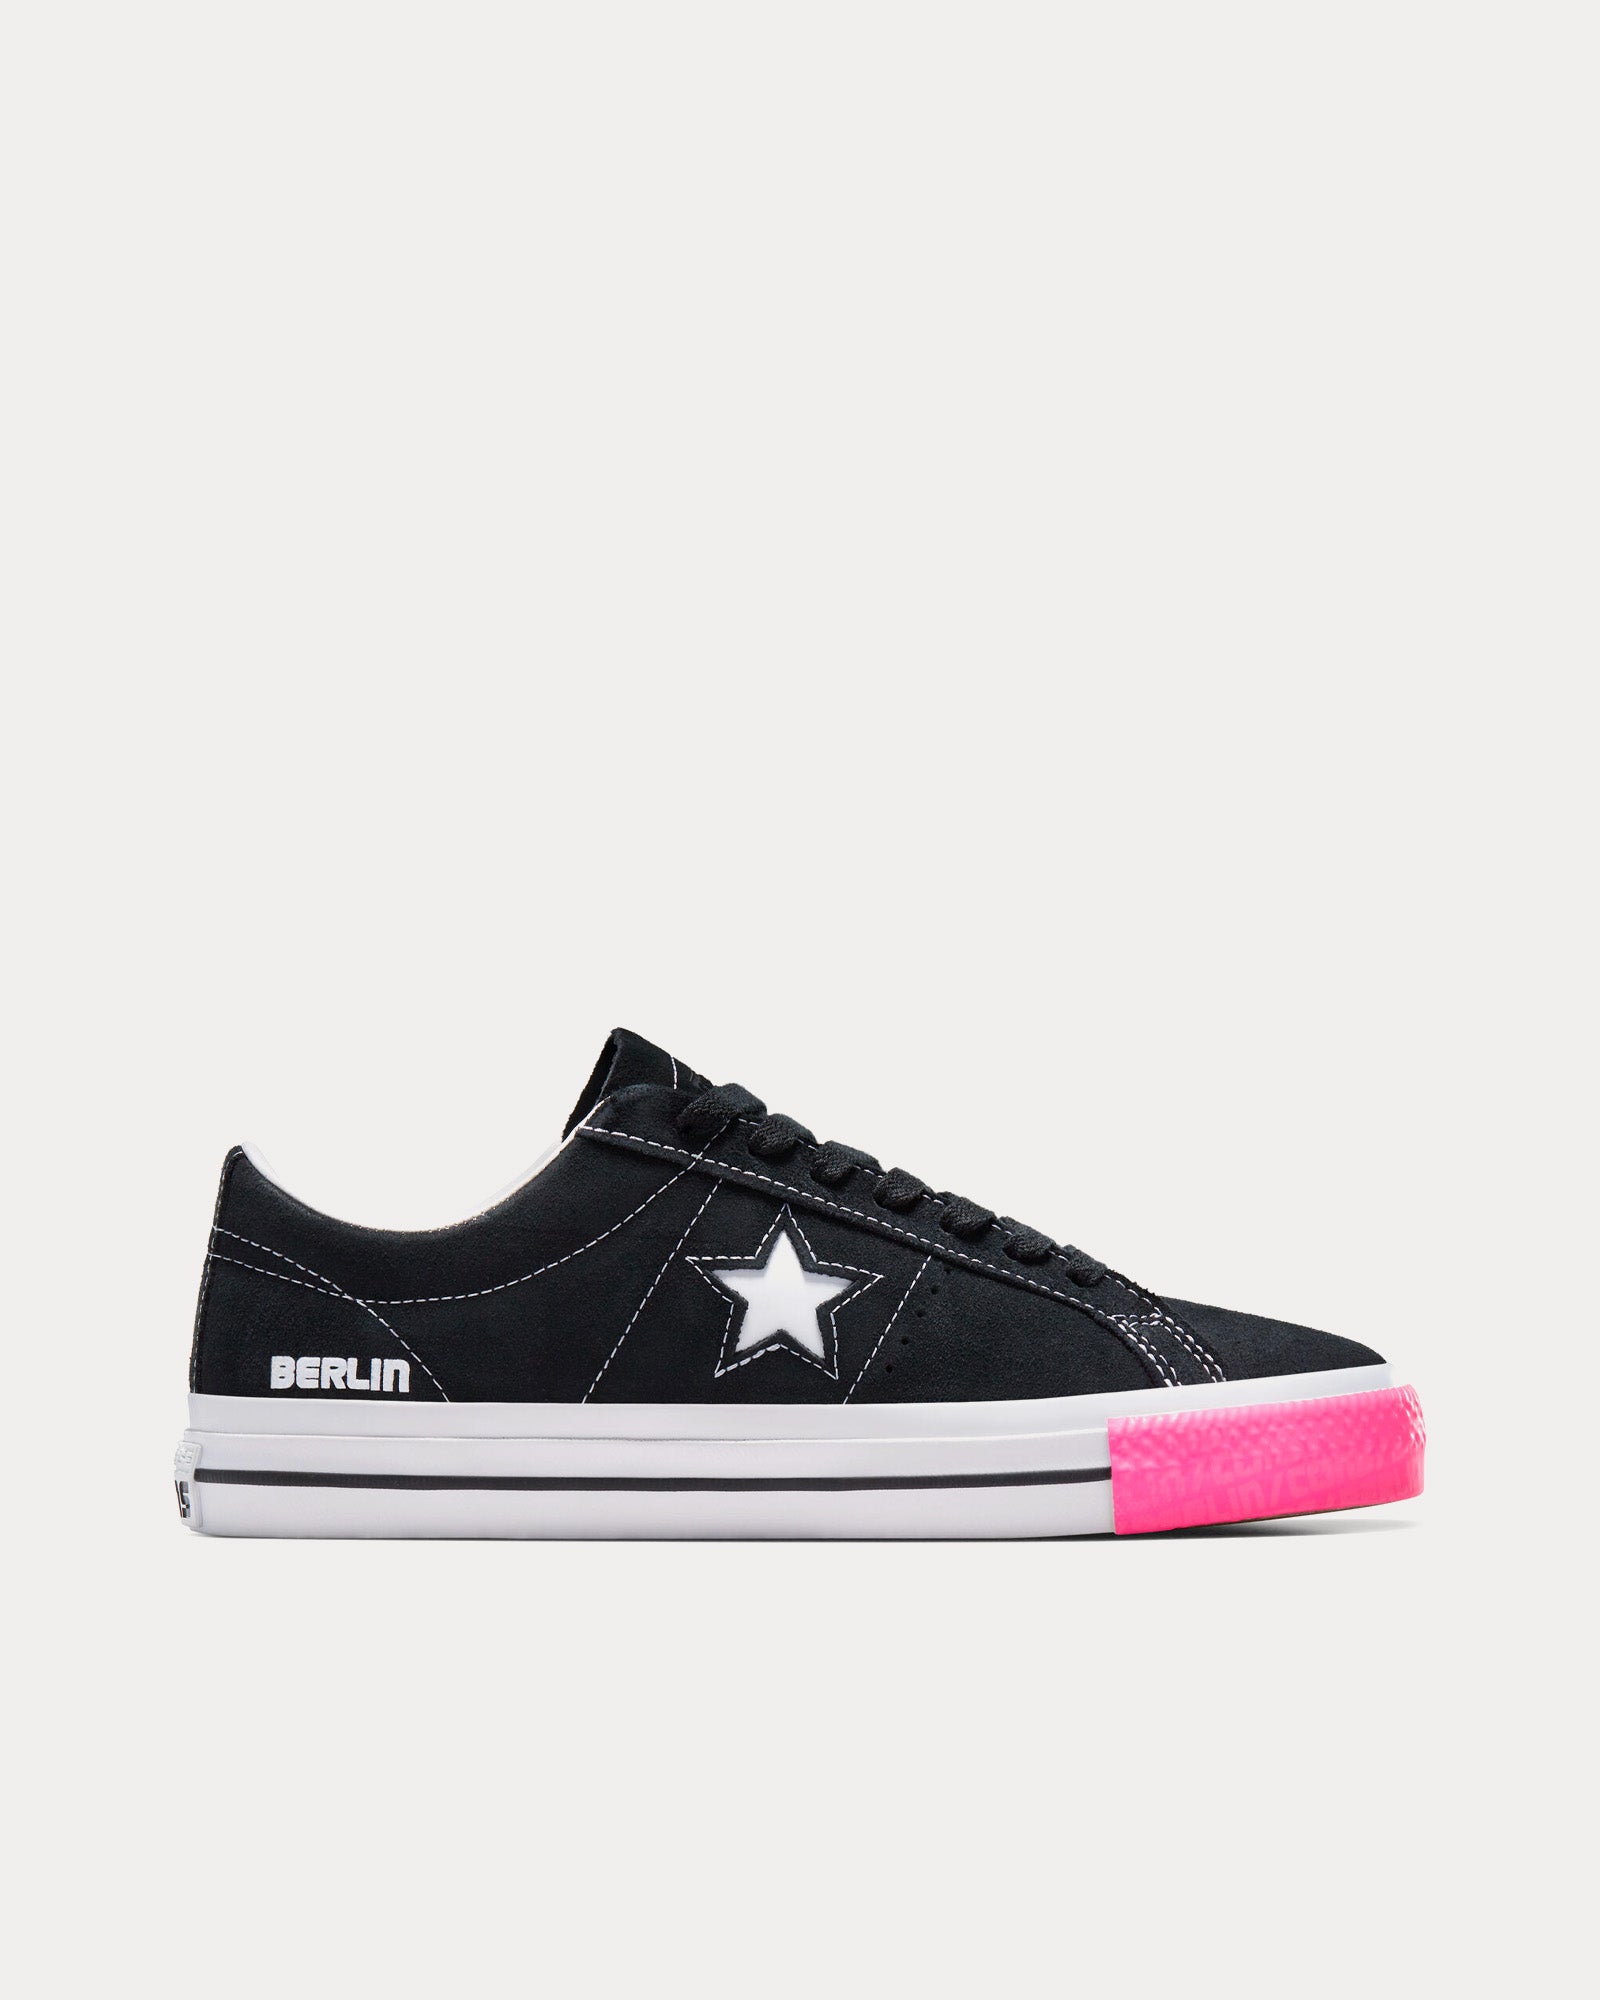 Converse - One Star Pro Berlin Black / Berlin Pink Low Top Sneakers